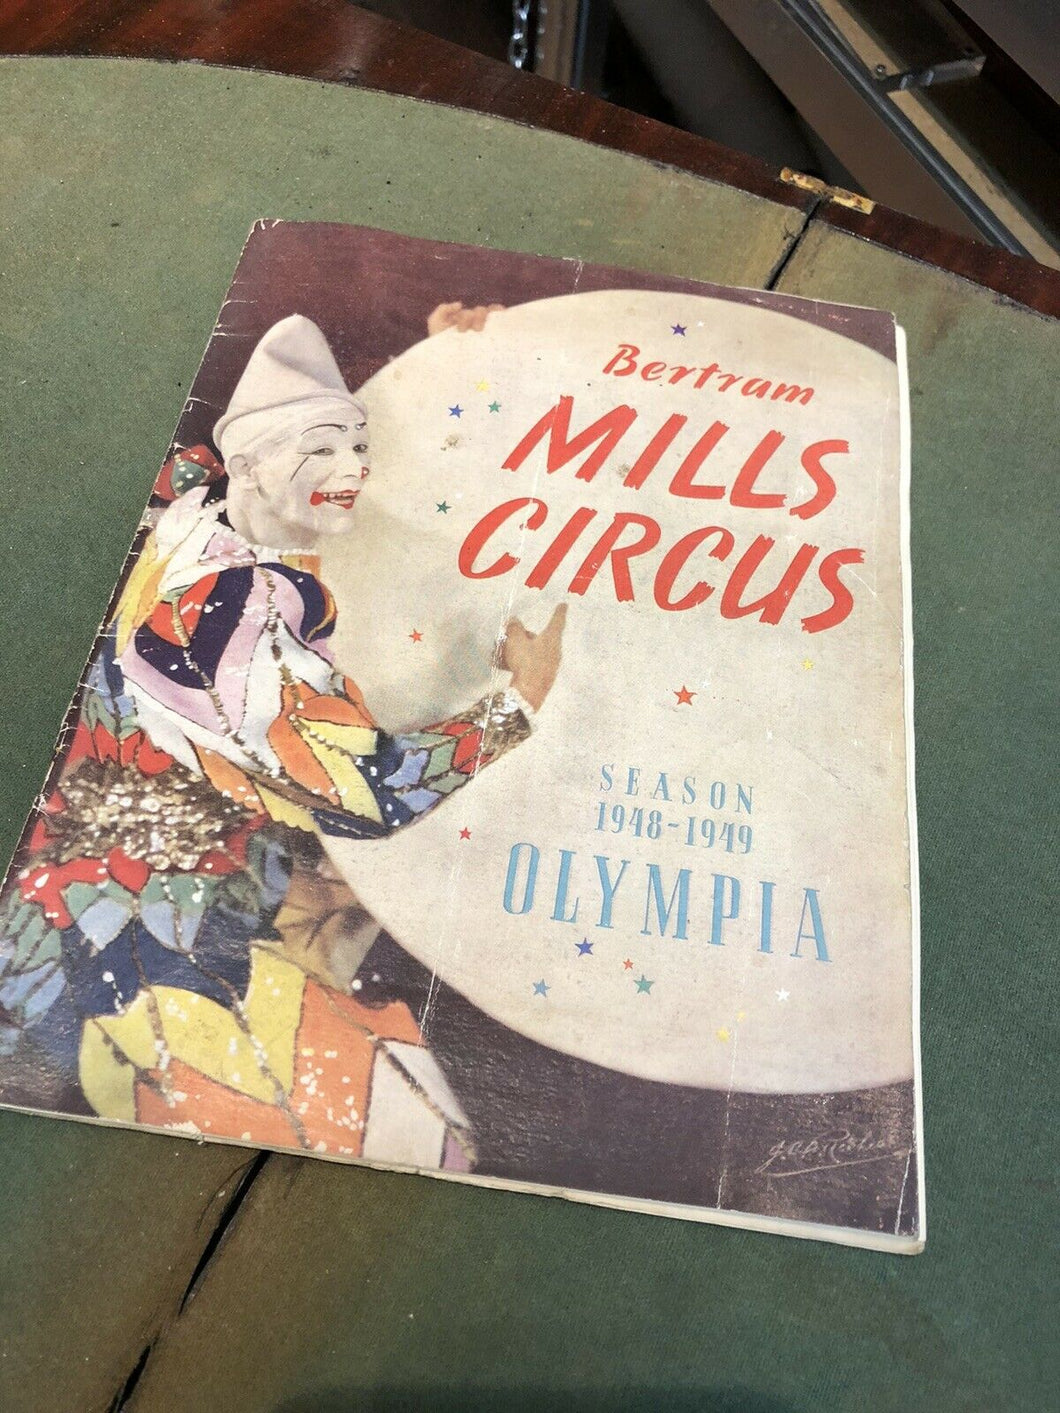 Bertram Mills Circus 1948-9 Olympia Exhibition Catalogue